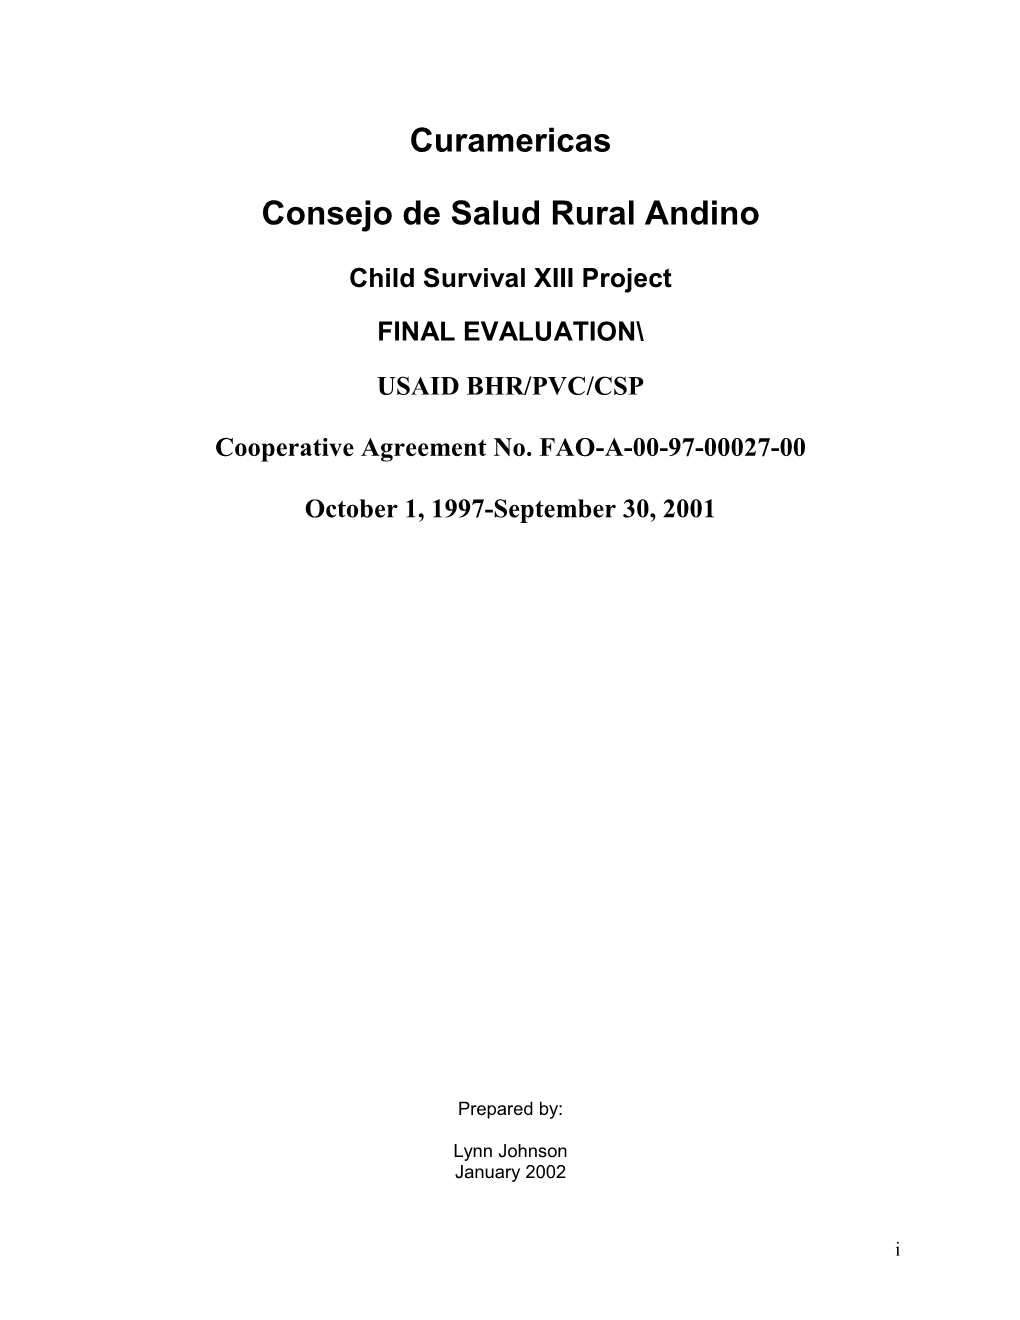 Final Evaluation 2002